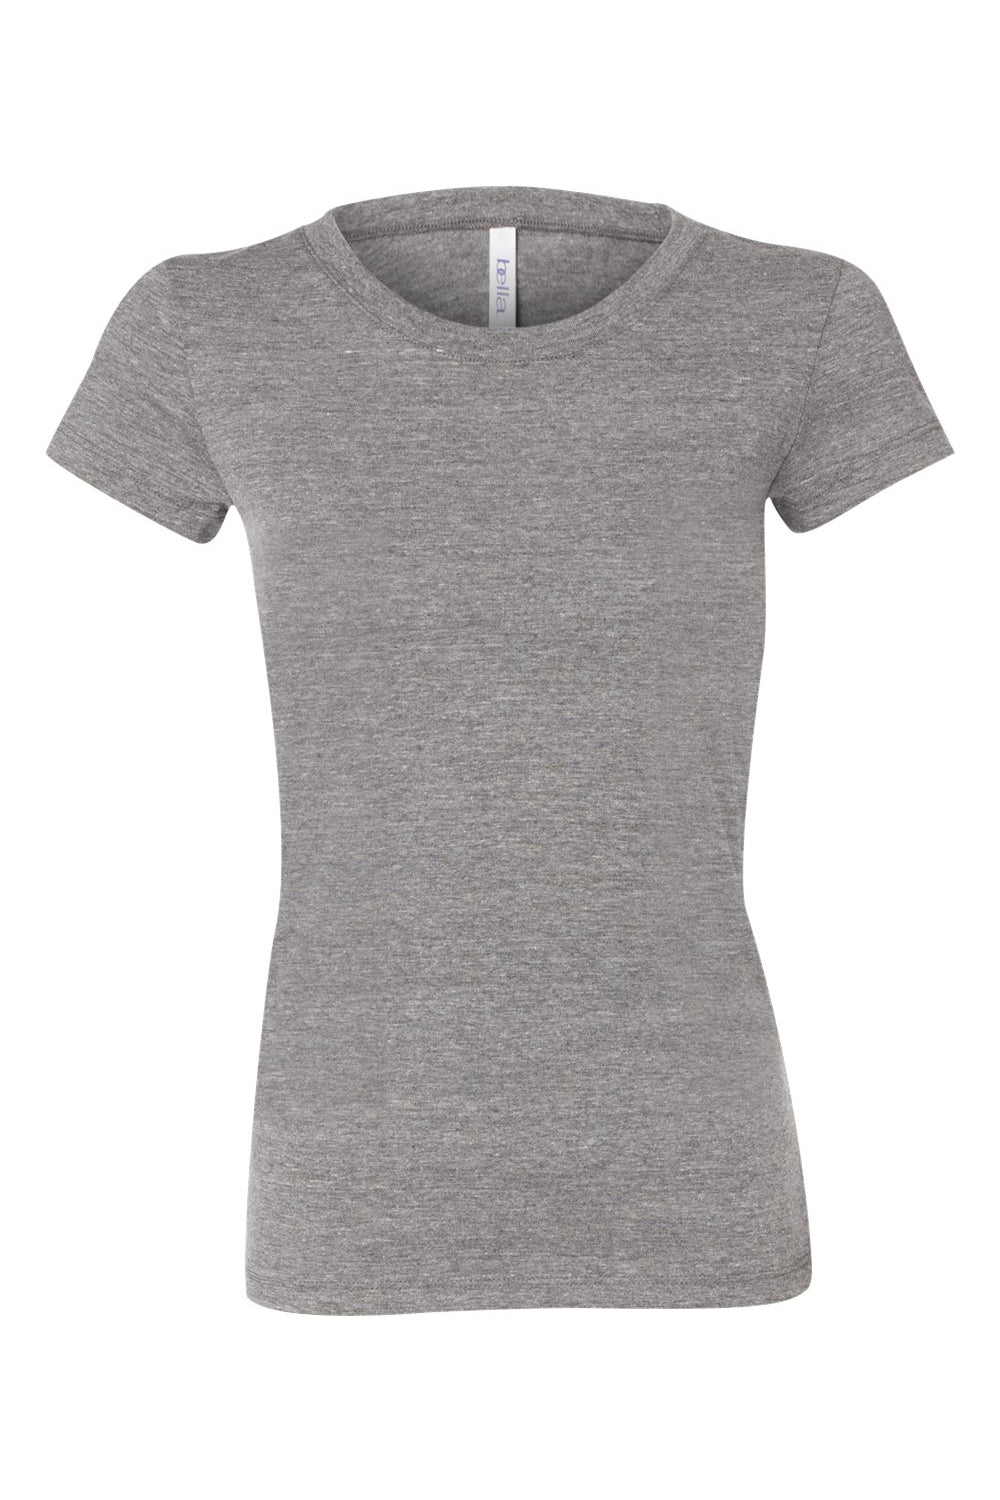 Bella + Canvas BC8413/B8413/8413 Womens Short Sleeve Crewneck T-Shirt Grey Flat Front